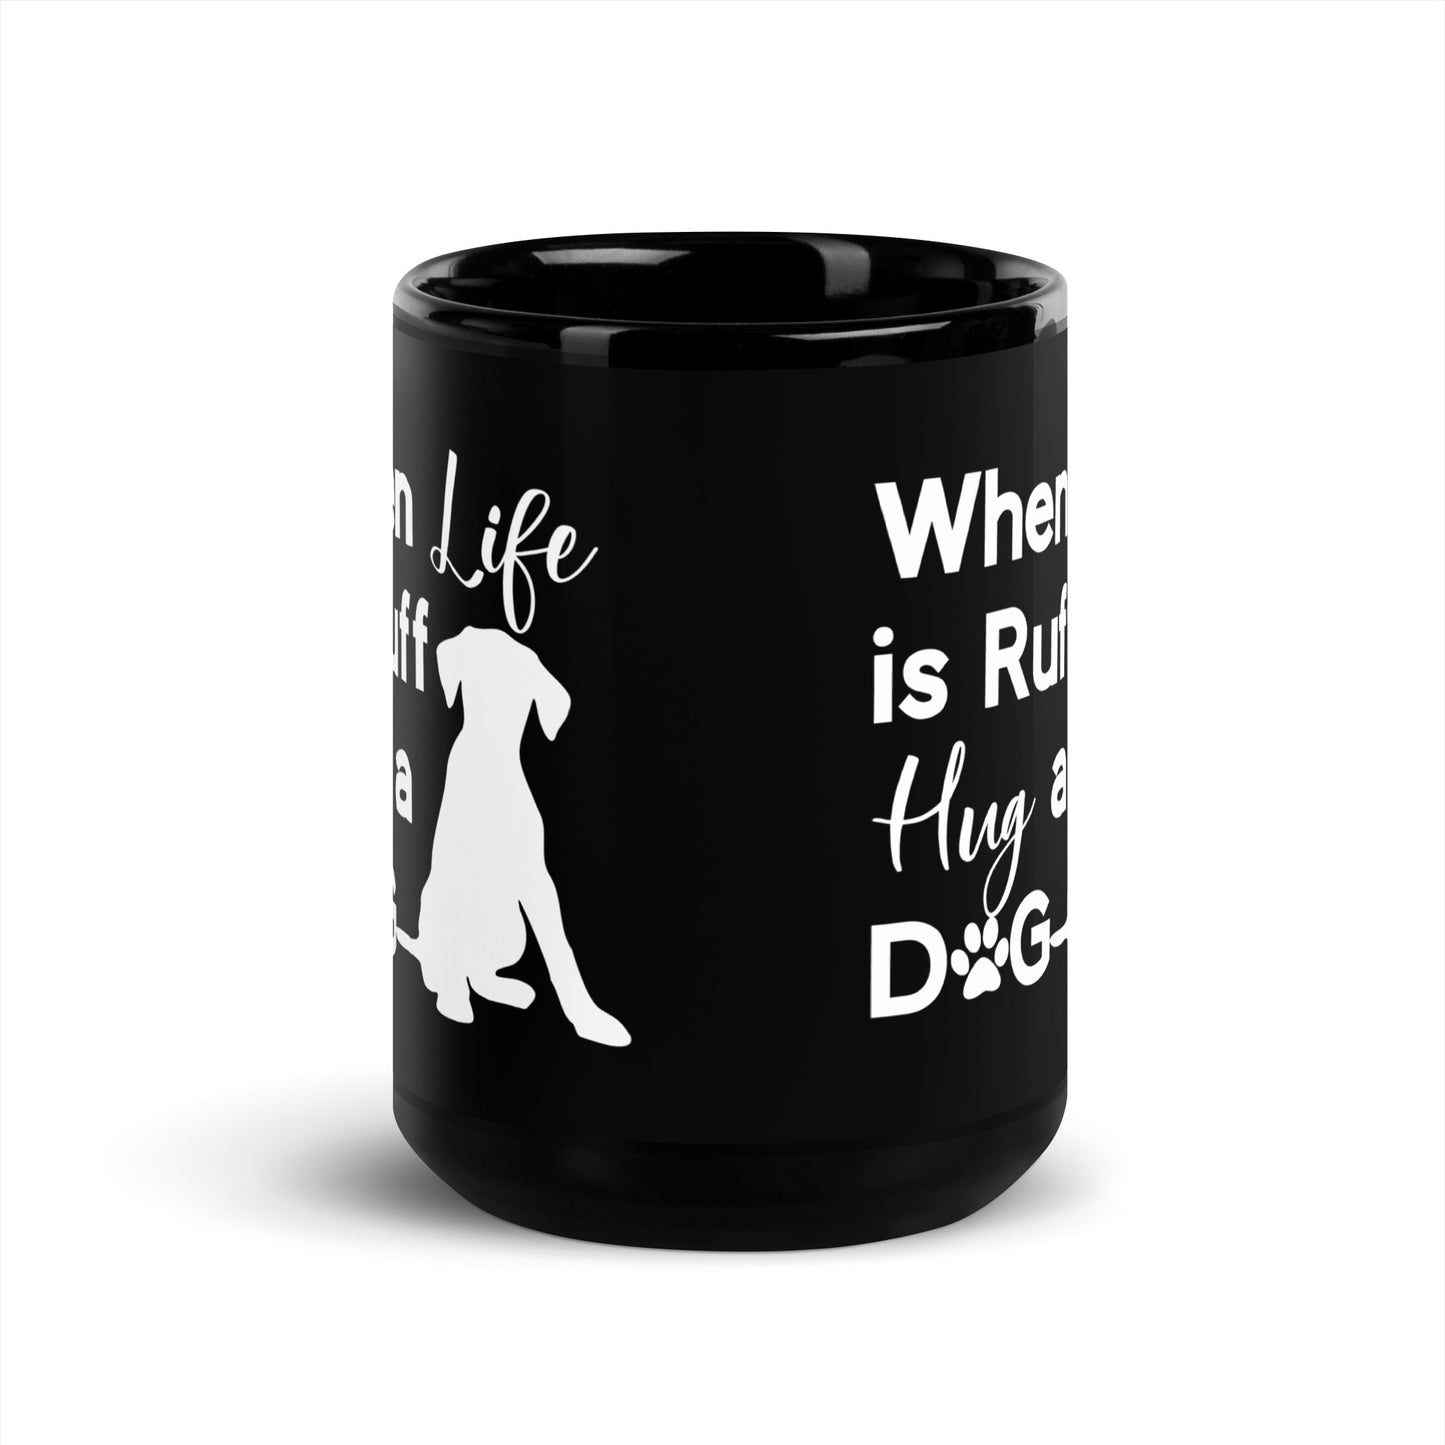 When Life is Ruff Hug a Dog Black Glossy Mug